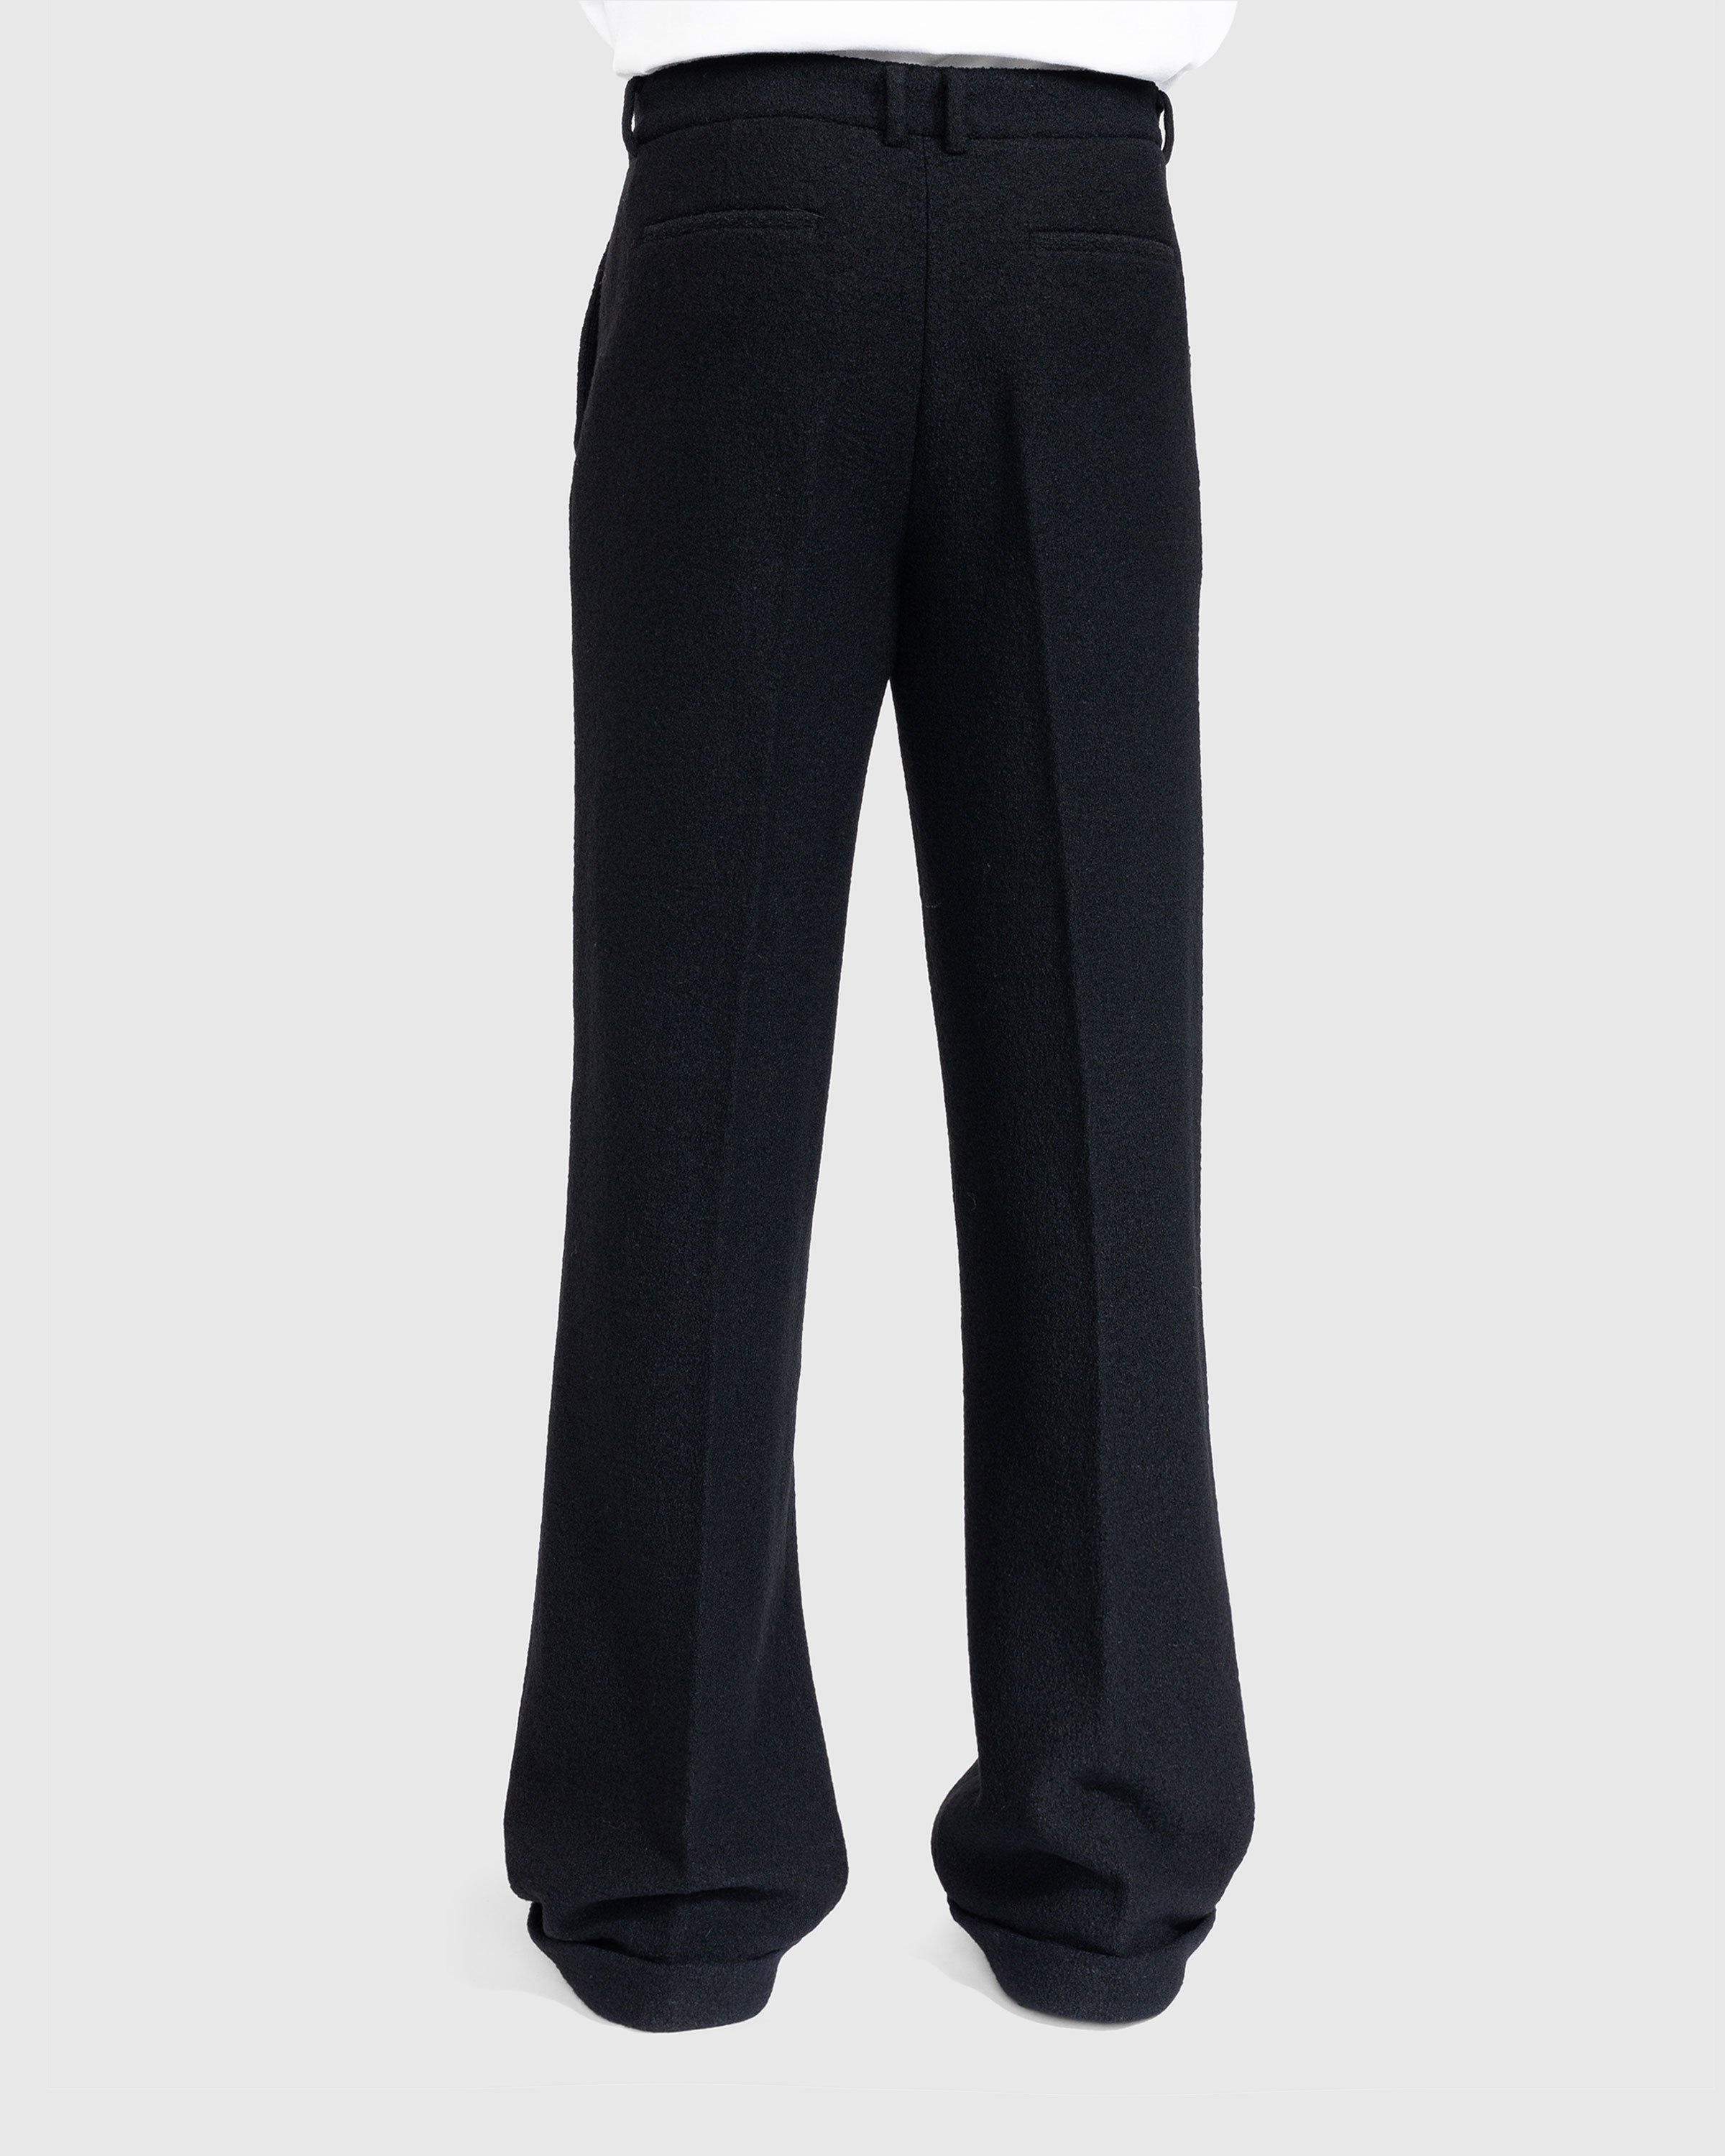 Trussardi – Boucle Jersey Trousers Black - Pants - Black - Image 4